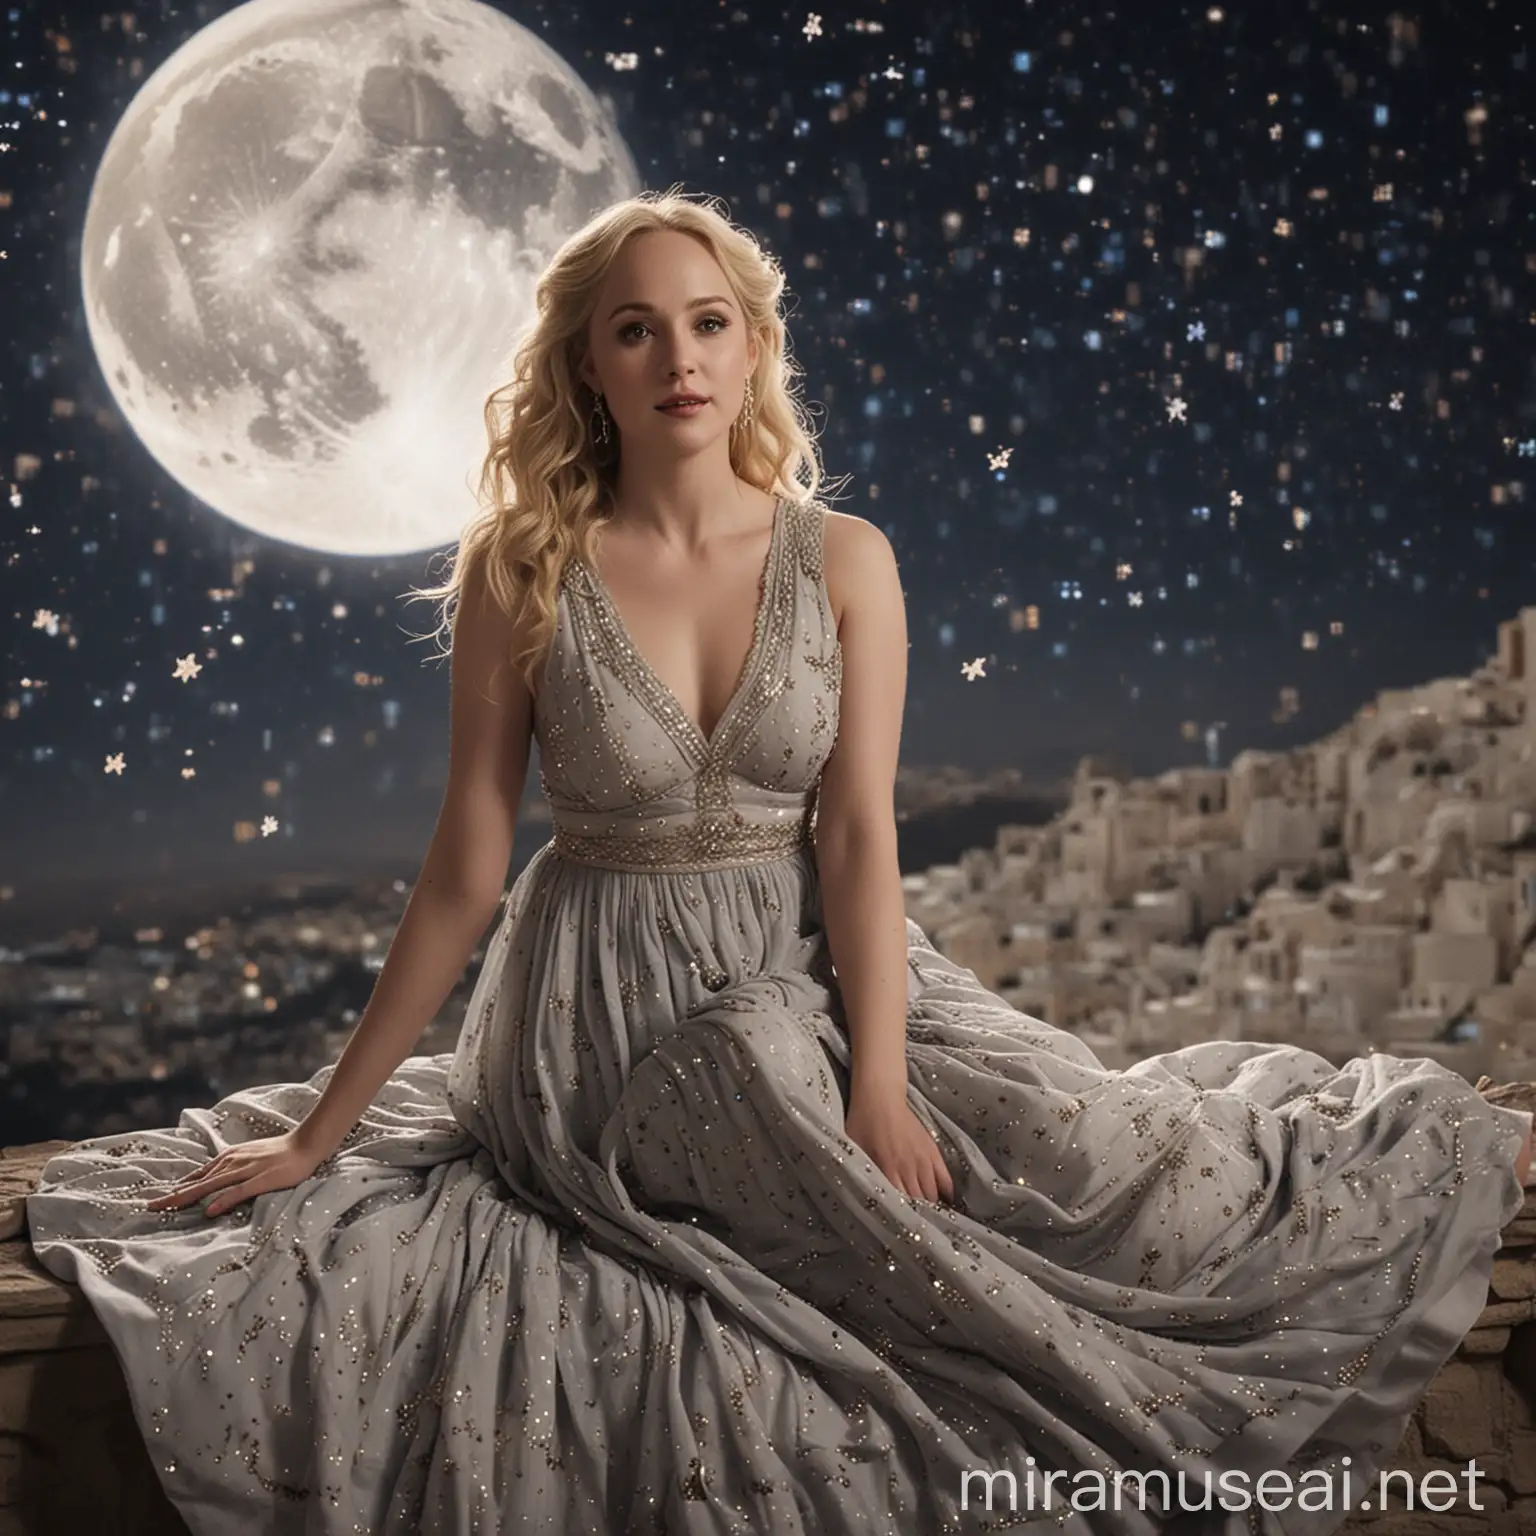 Celestial Goddess Candice Accola Adorns the Night Sky on Crescent Moon